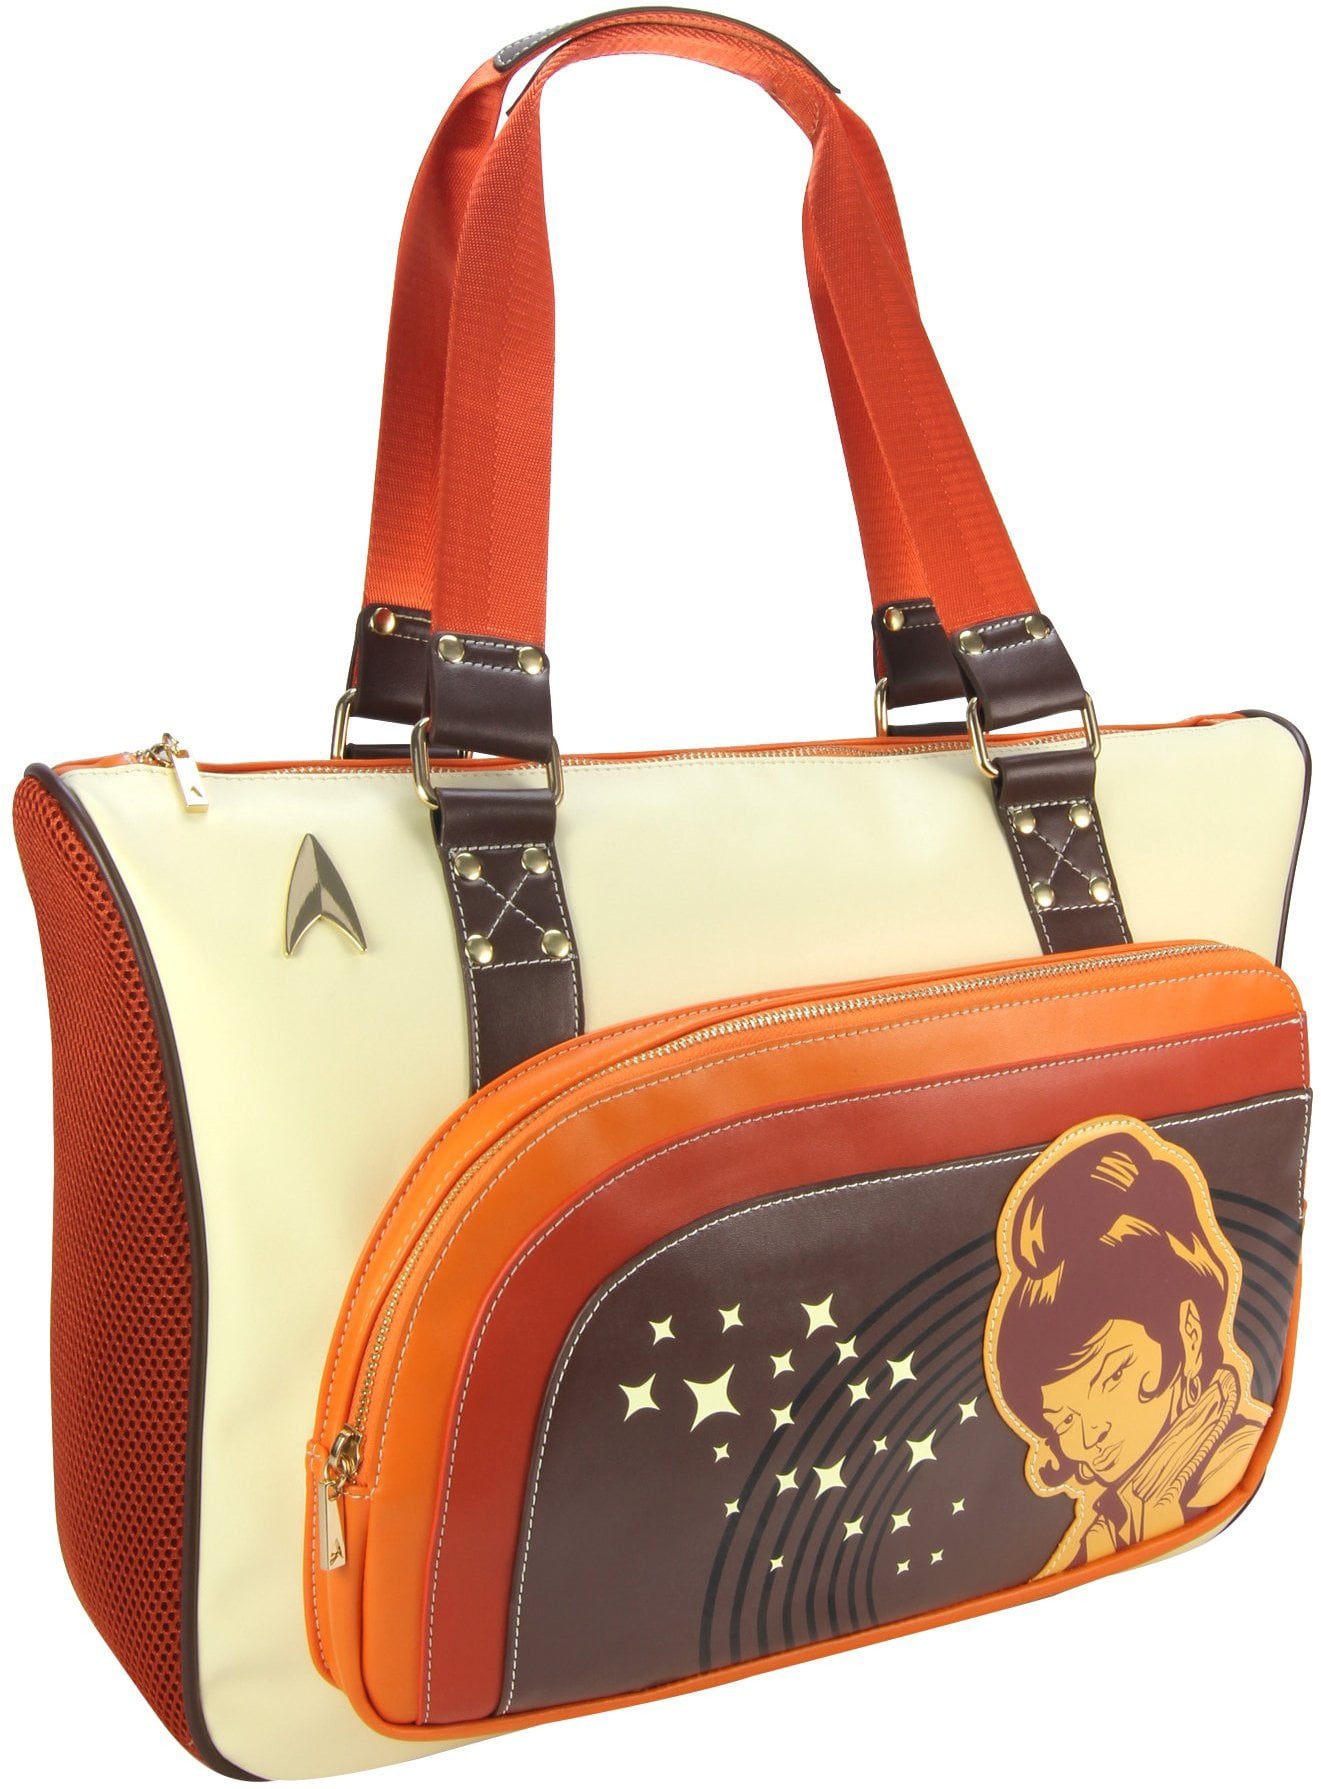 Make-Up Bag & Purse Star Trek The Original Series Uhura Gift Set Journal 